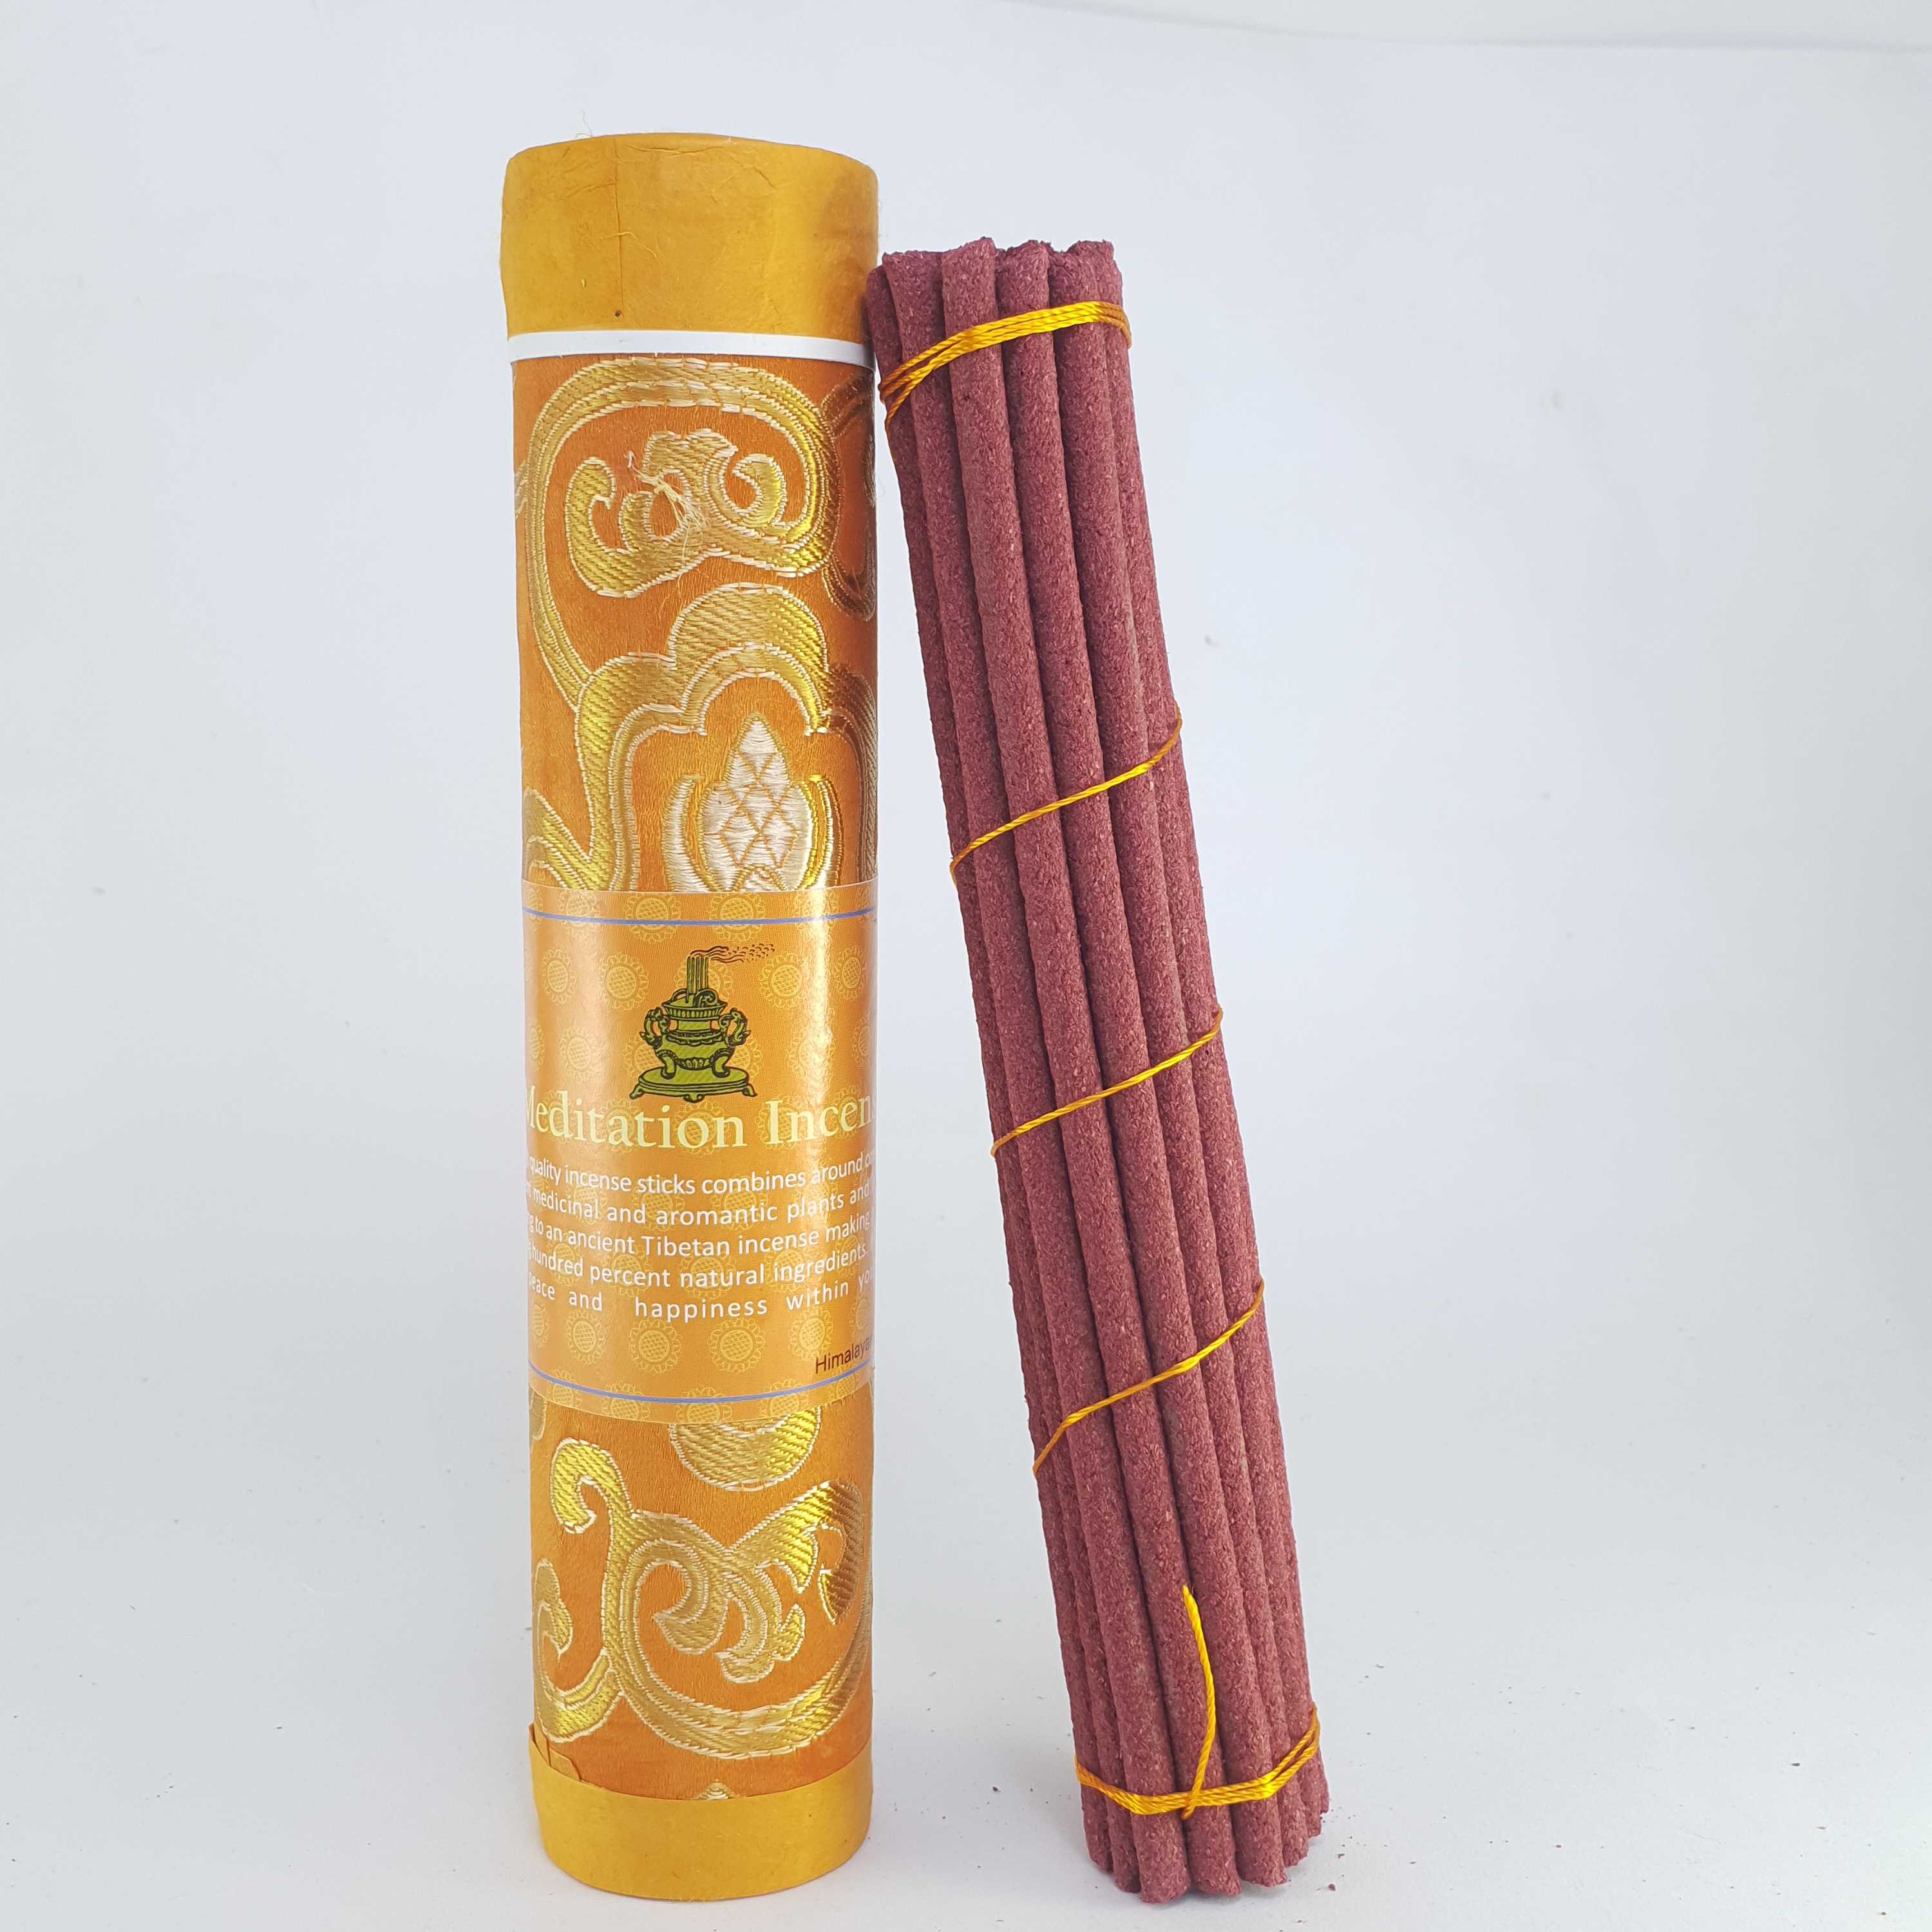 Meditation Buddhist Herbal Incense tube